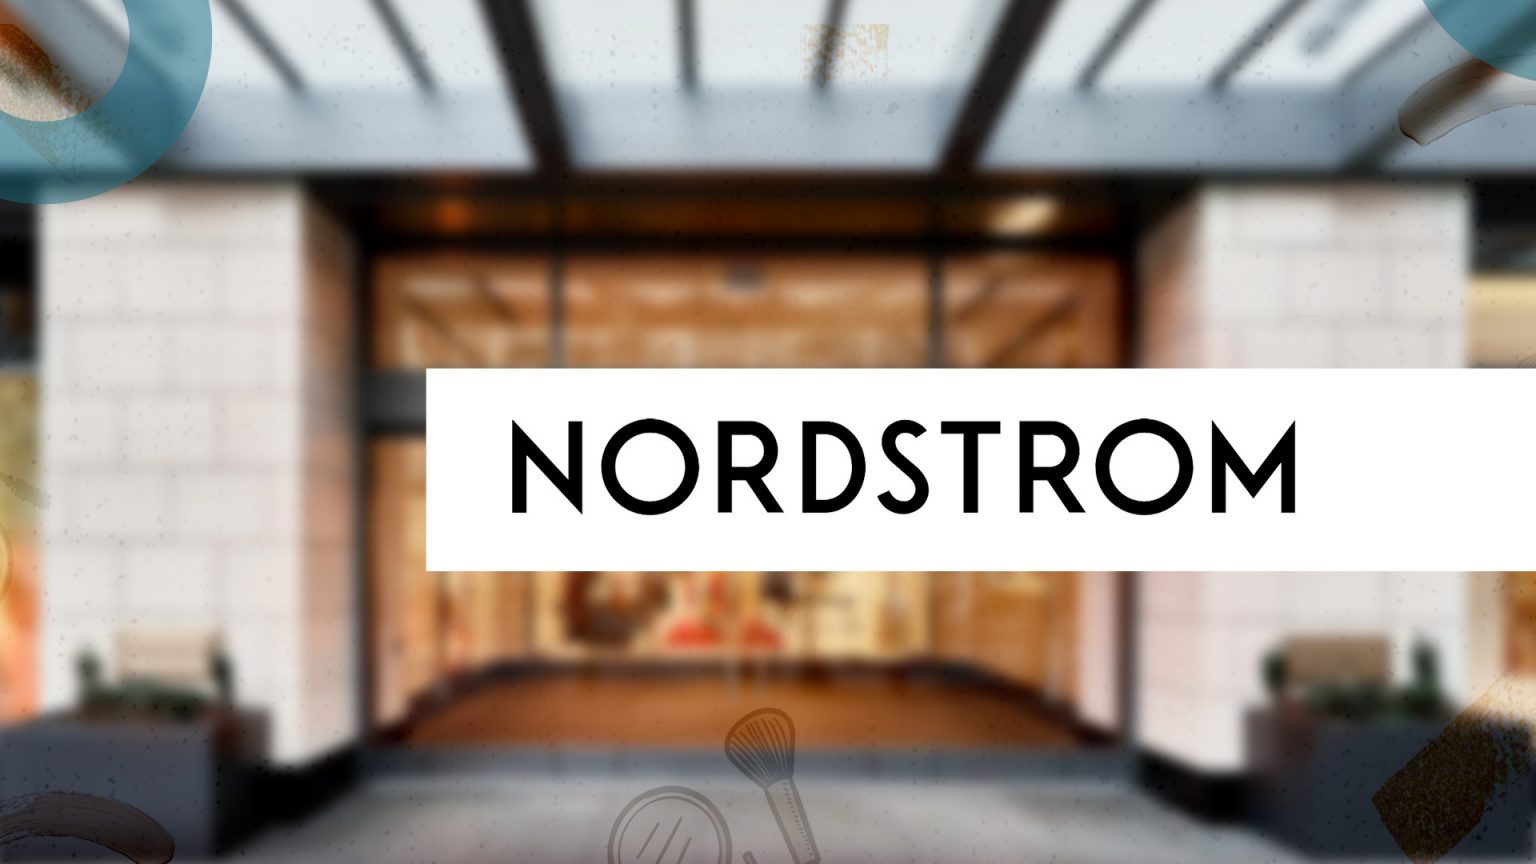 nordstrom app case study